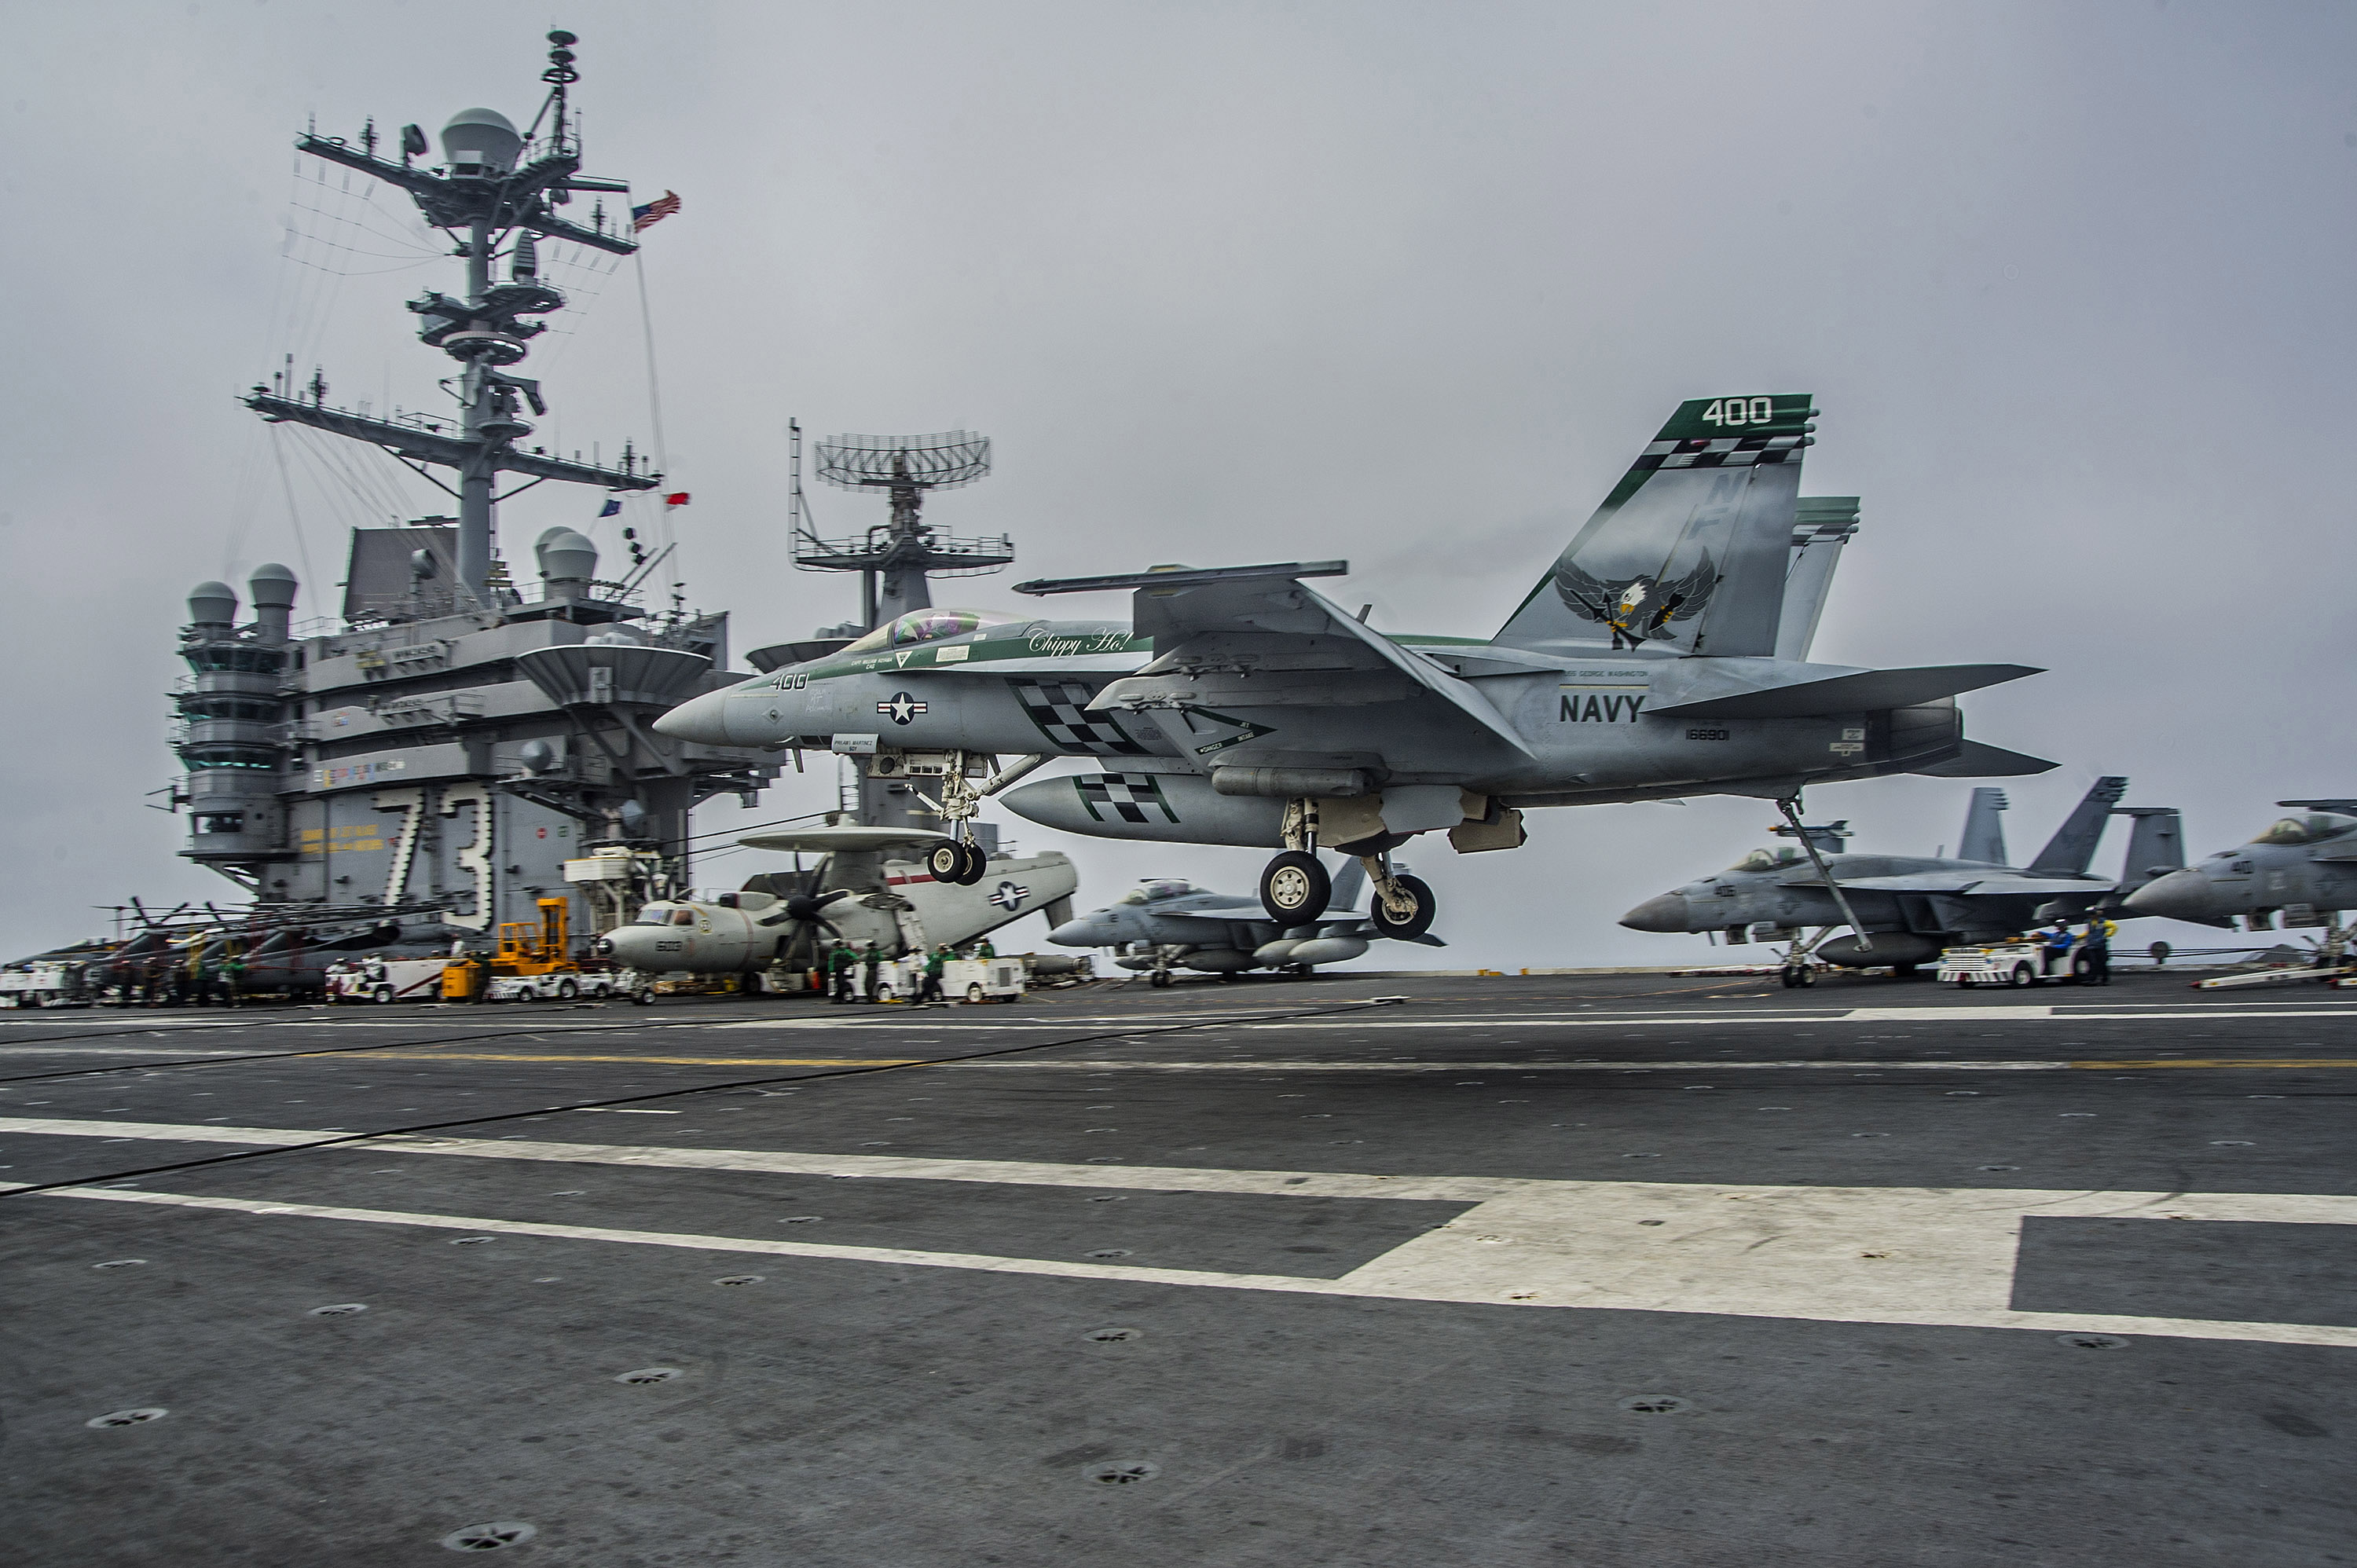  F/A-18E lands on aircraft carrier USS George Washington (CVN-73). US Navy Photo